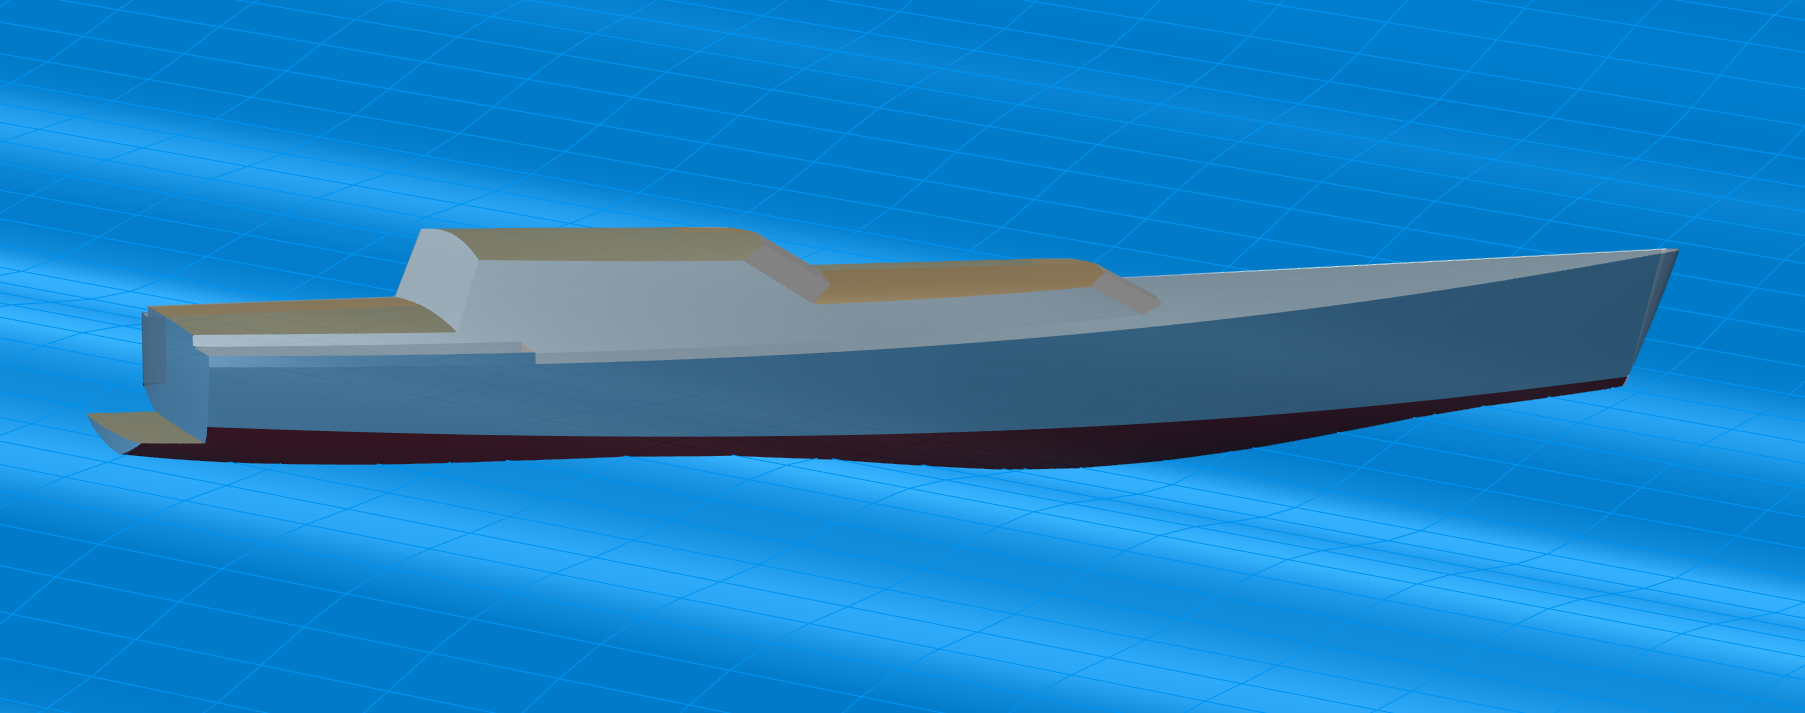 96' Schooner ZEBULUN - Kasten Marine Design, Inc.